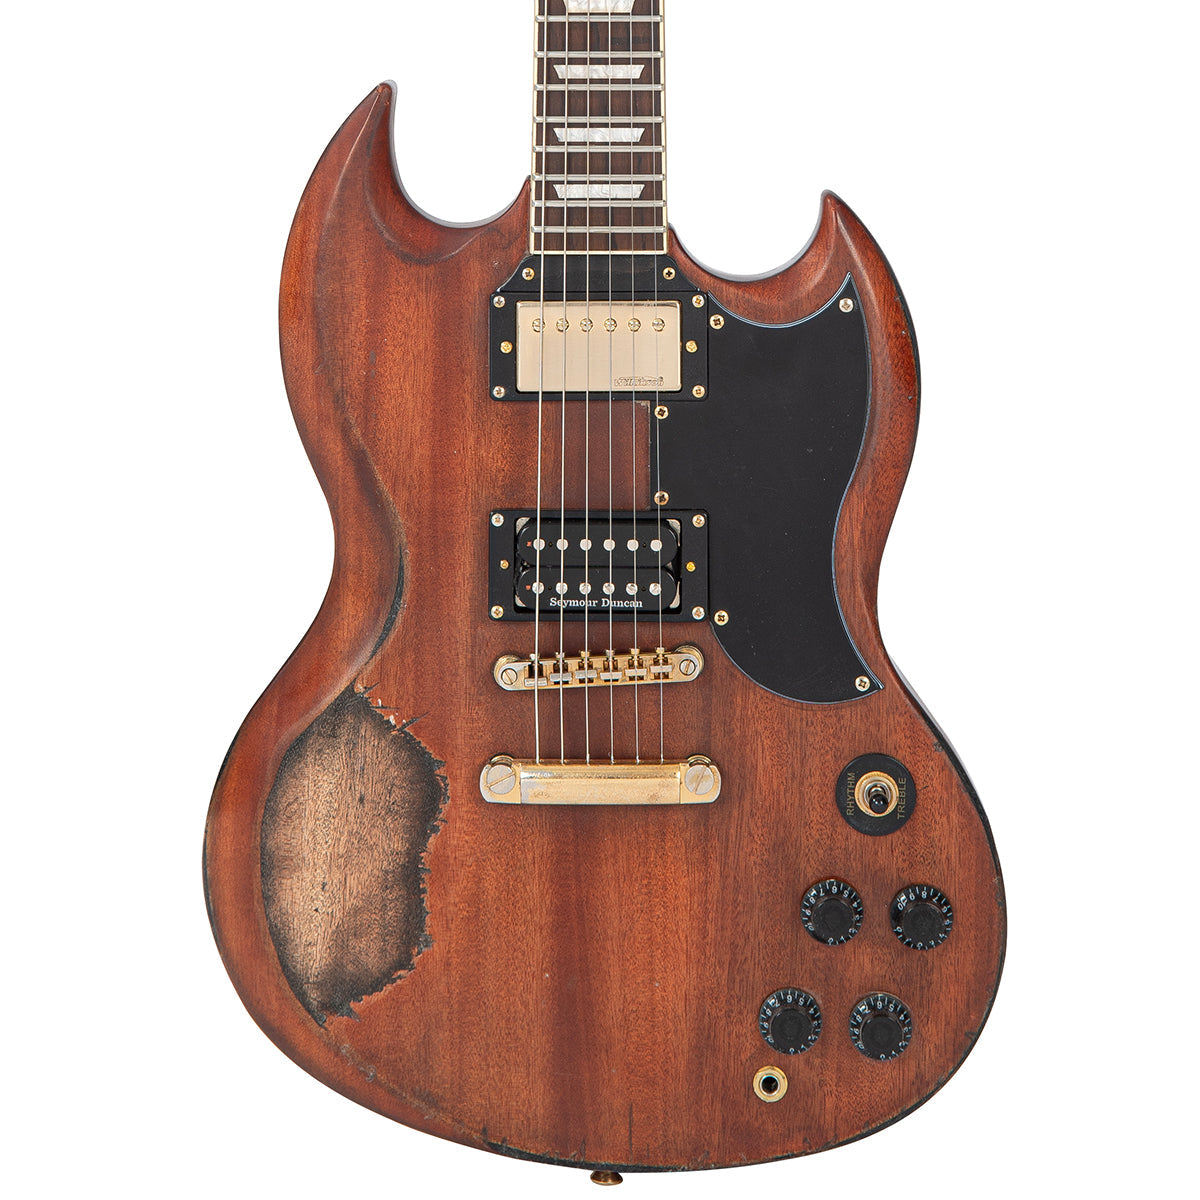 SOLD - Vintage VS6 ProShop Custom-Build ~ Heavy Relic Mahogany, Electric Guitars for sale at Richards Guitars.